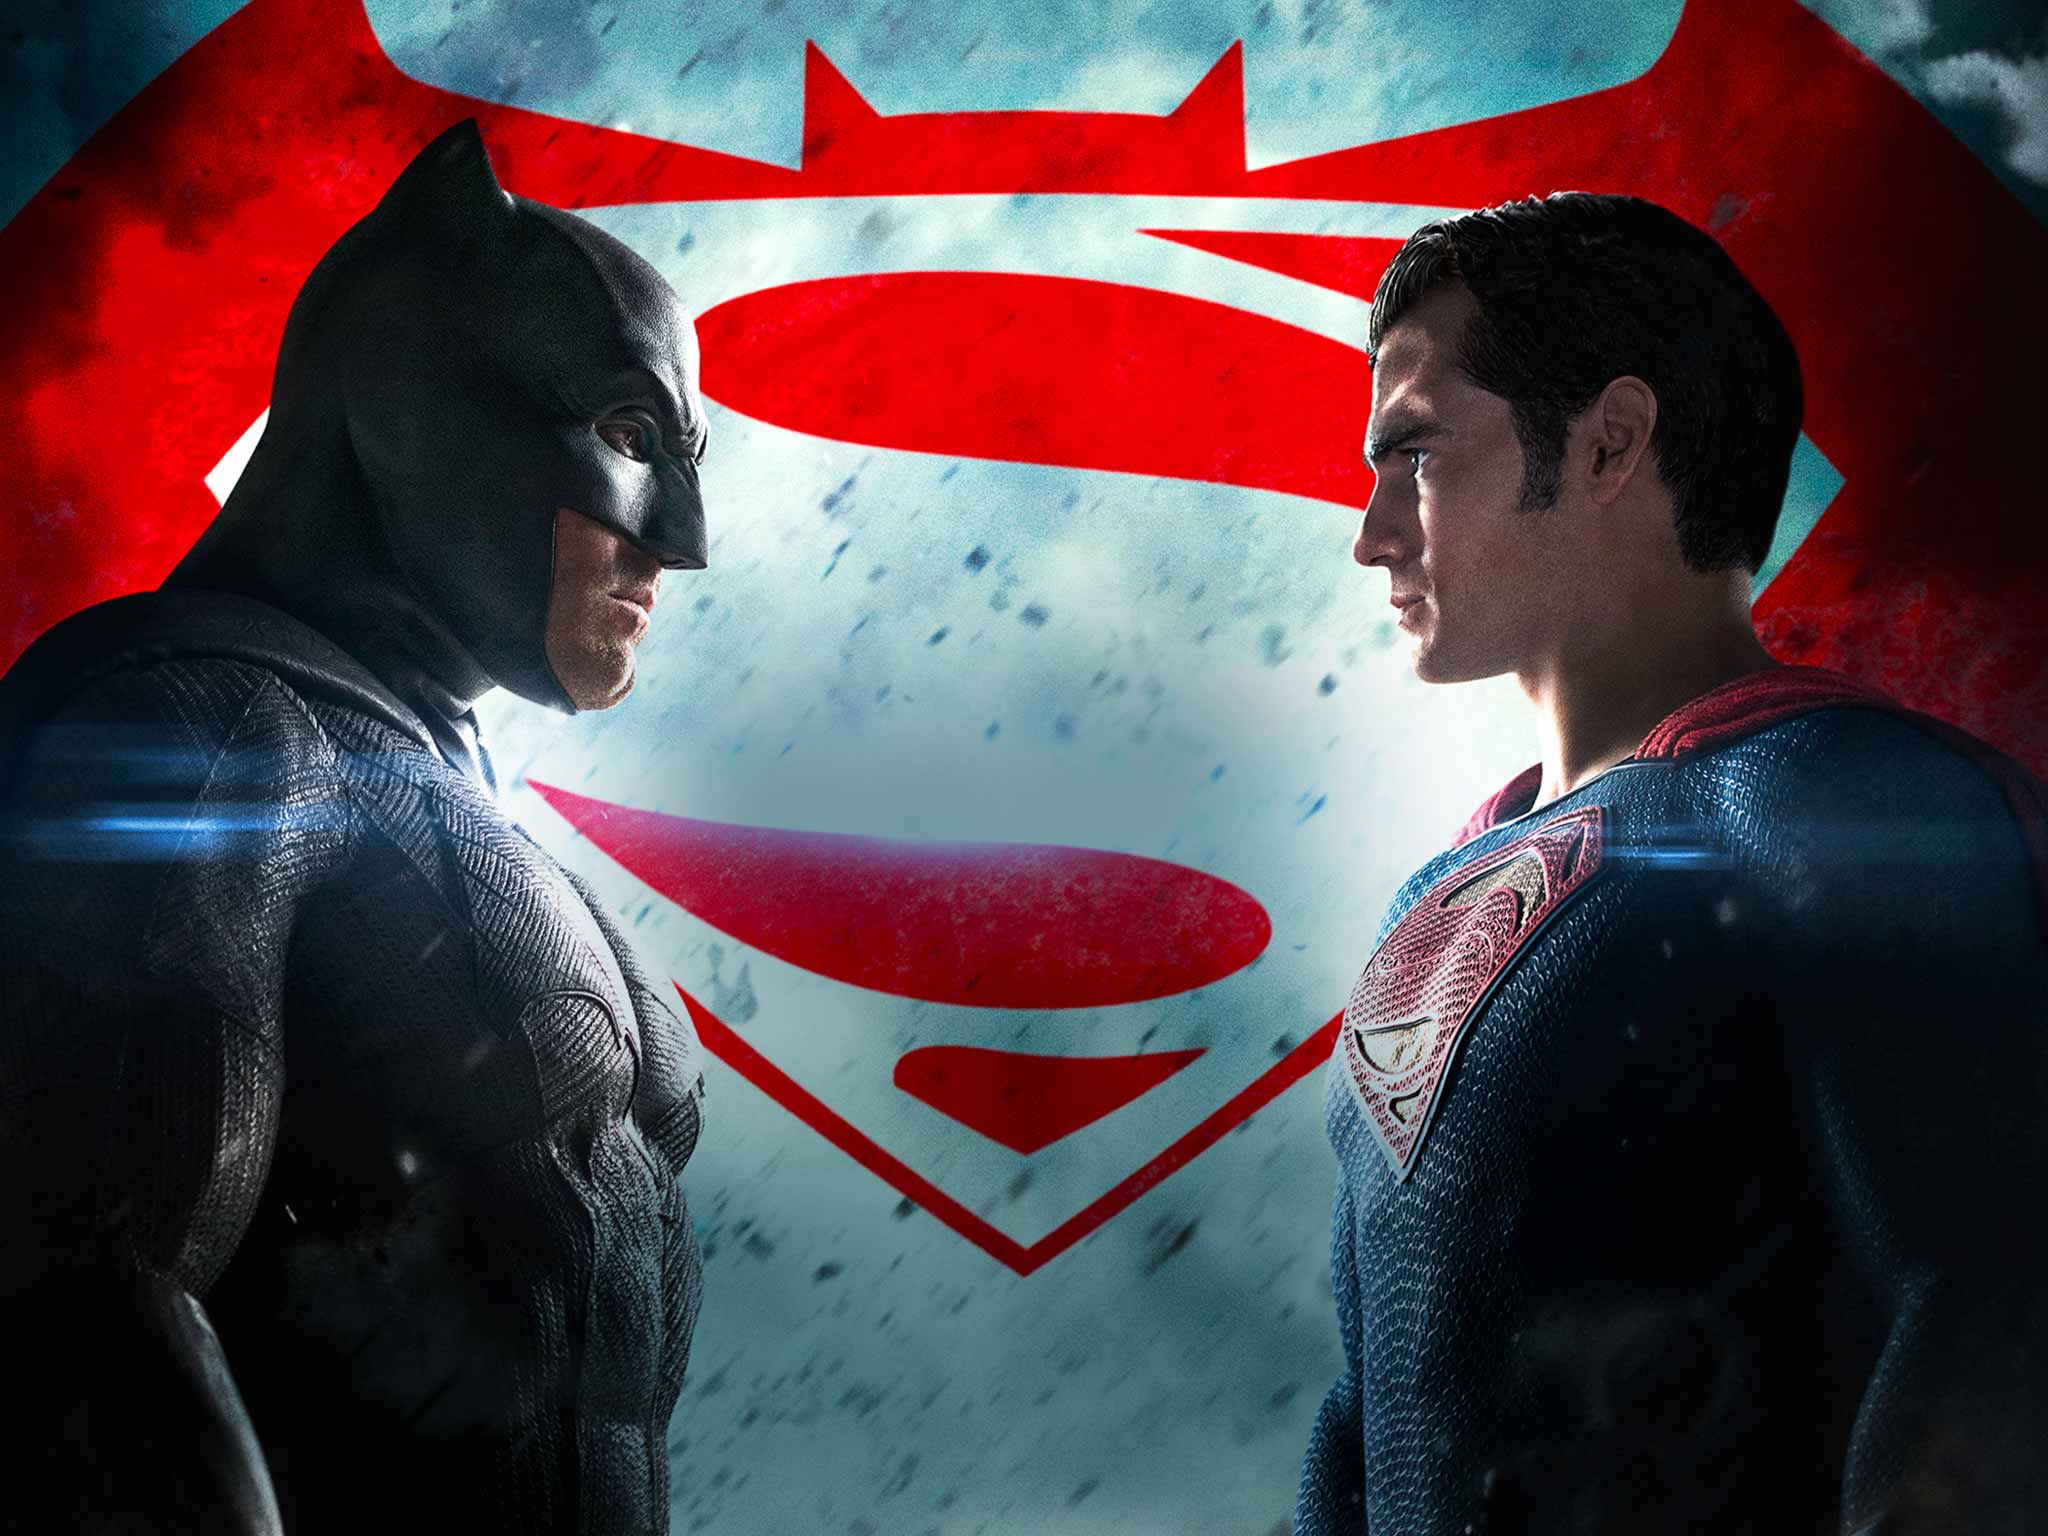 BATMAN VS. SUPERMAN WALLPAPER FOR PHONE